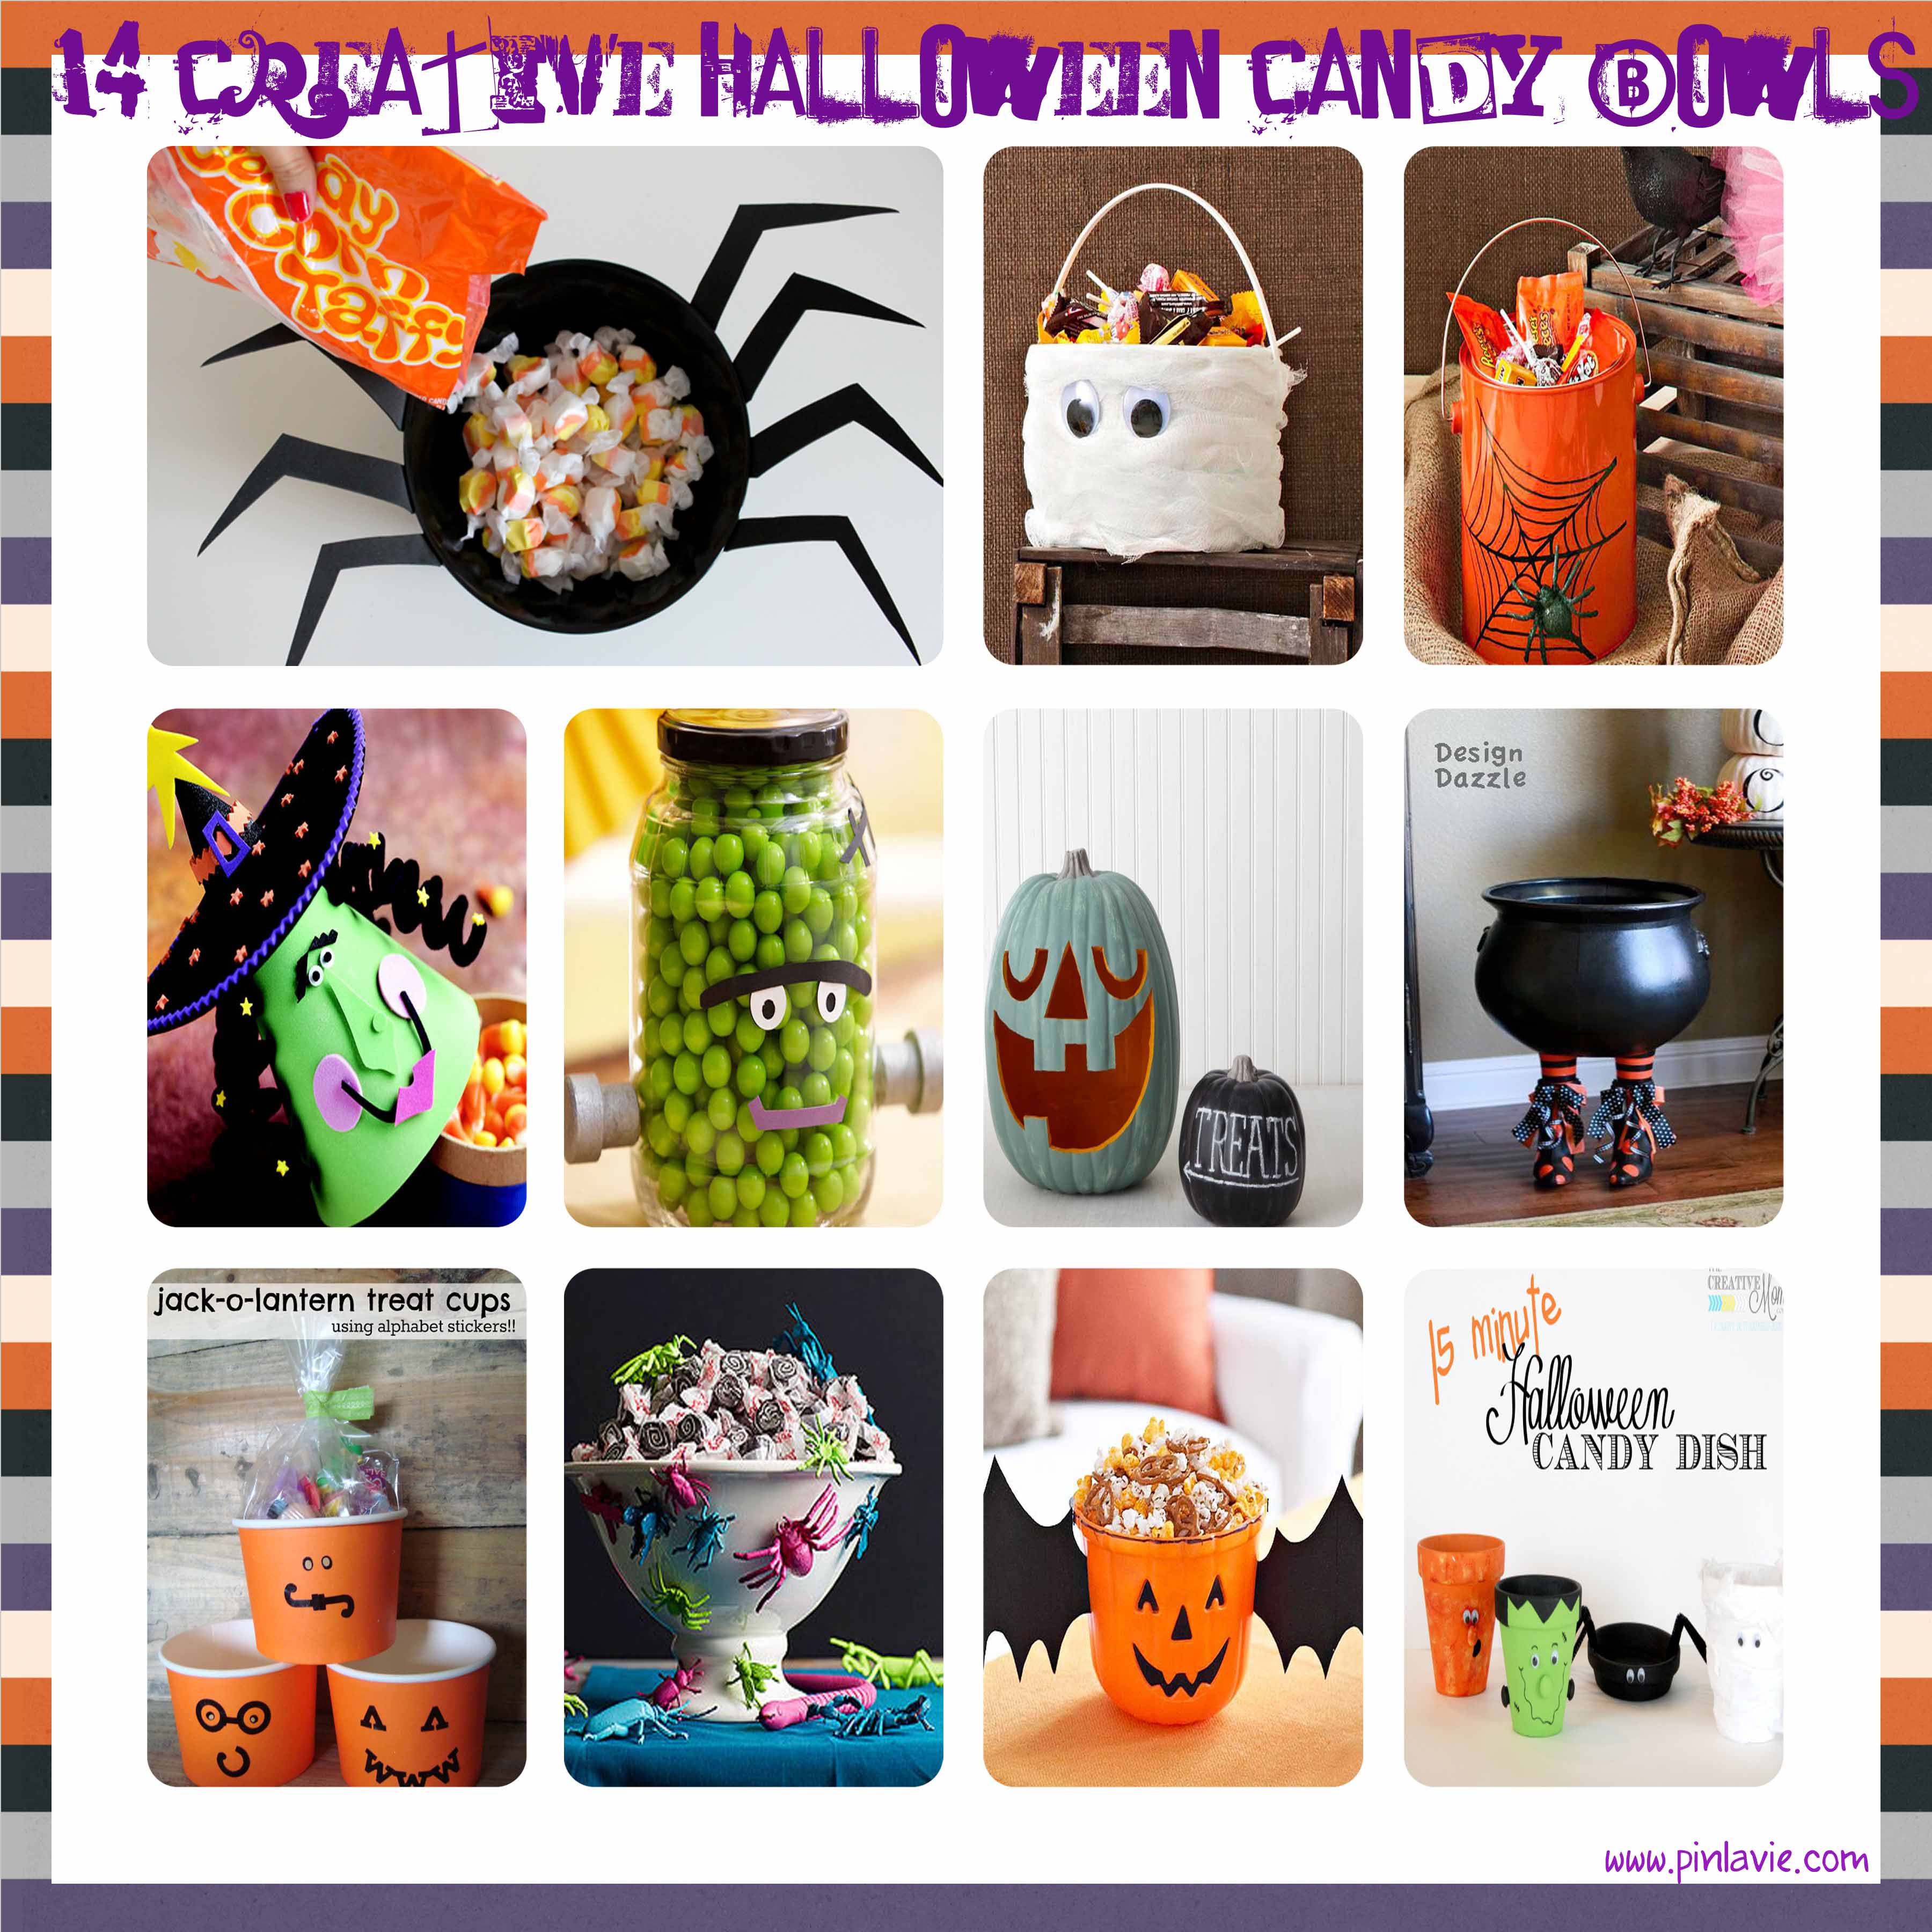 14_creative_halloween_candy_bowls